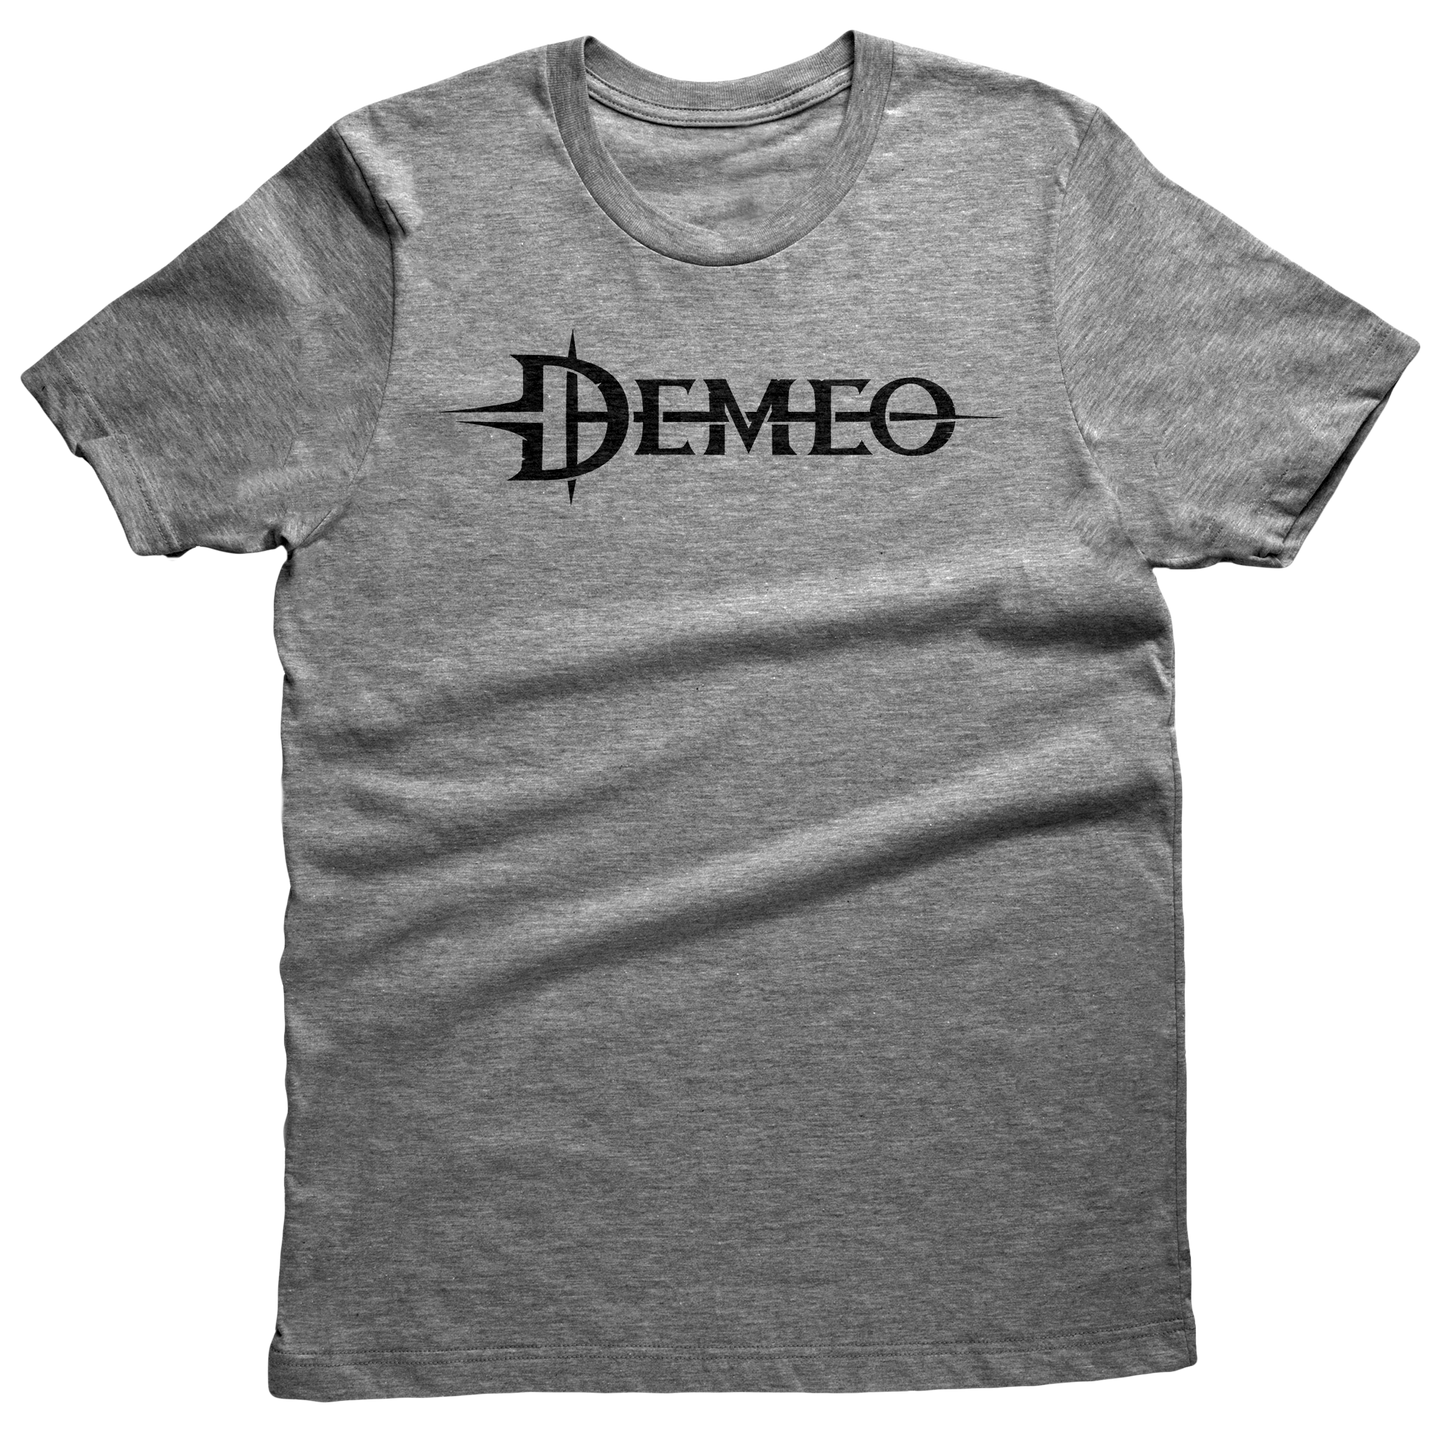 Demeo Logo Tee - Black/Gray